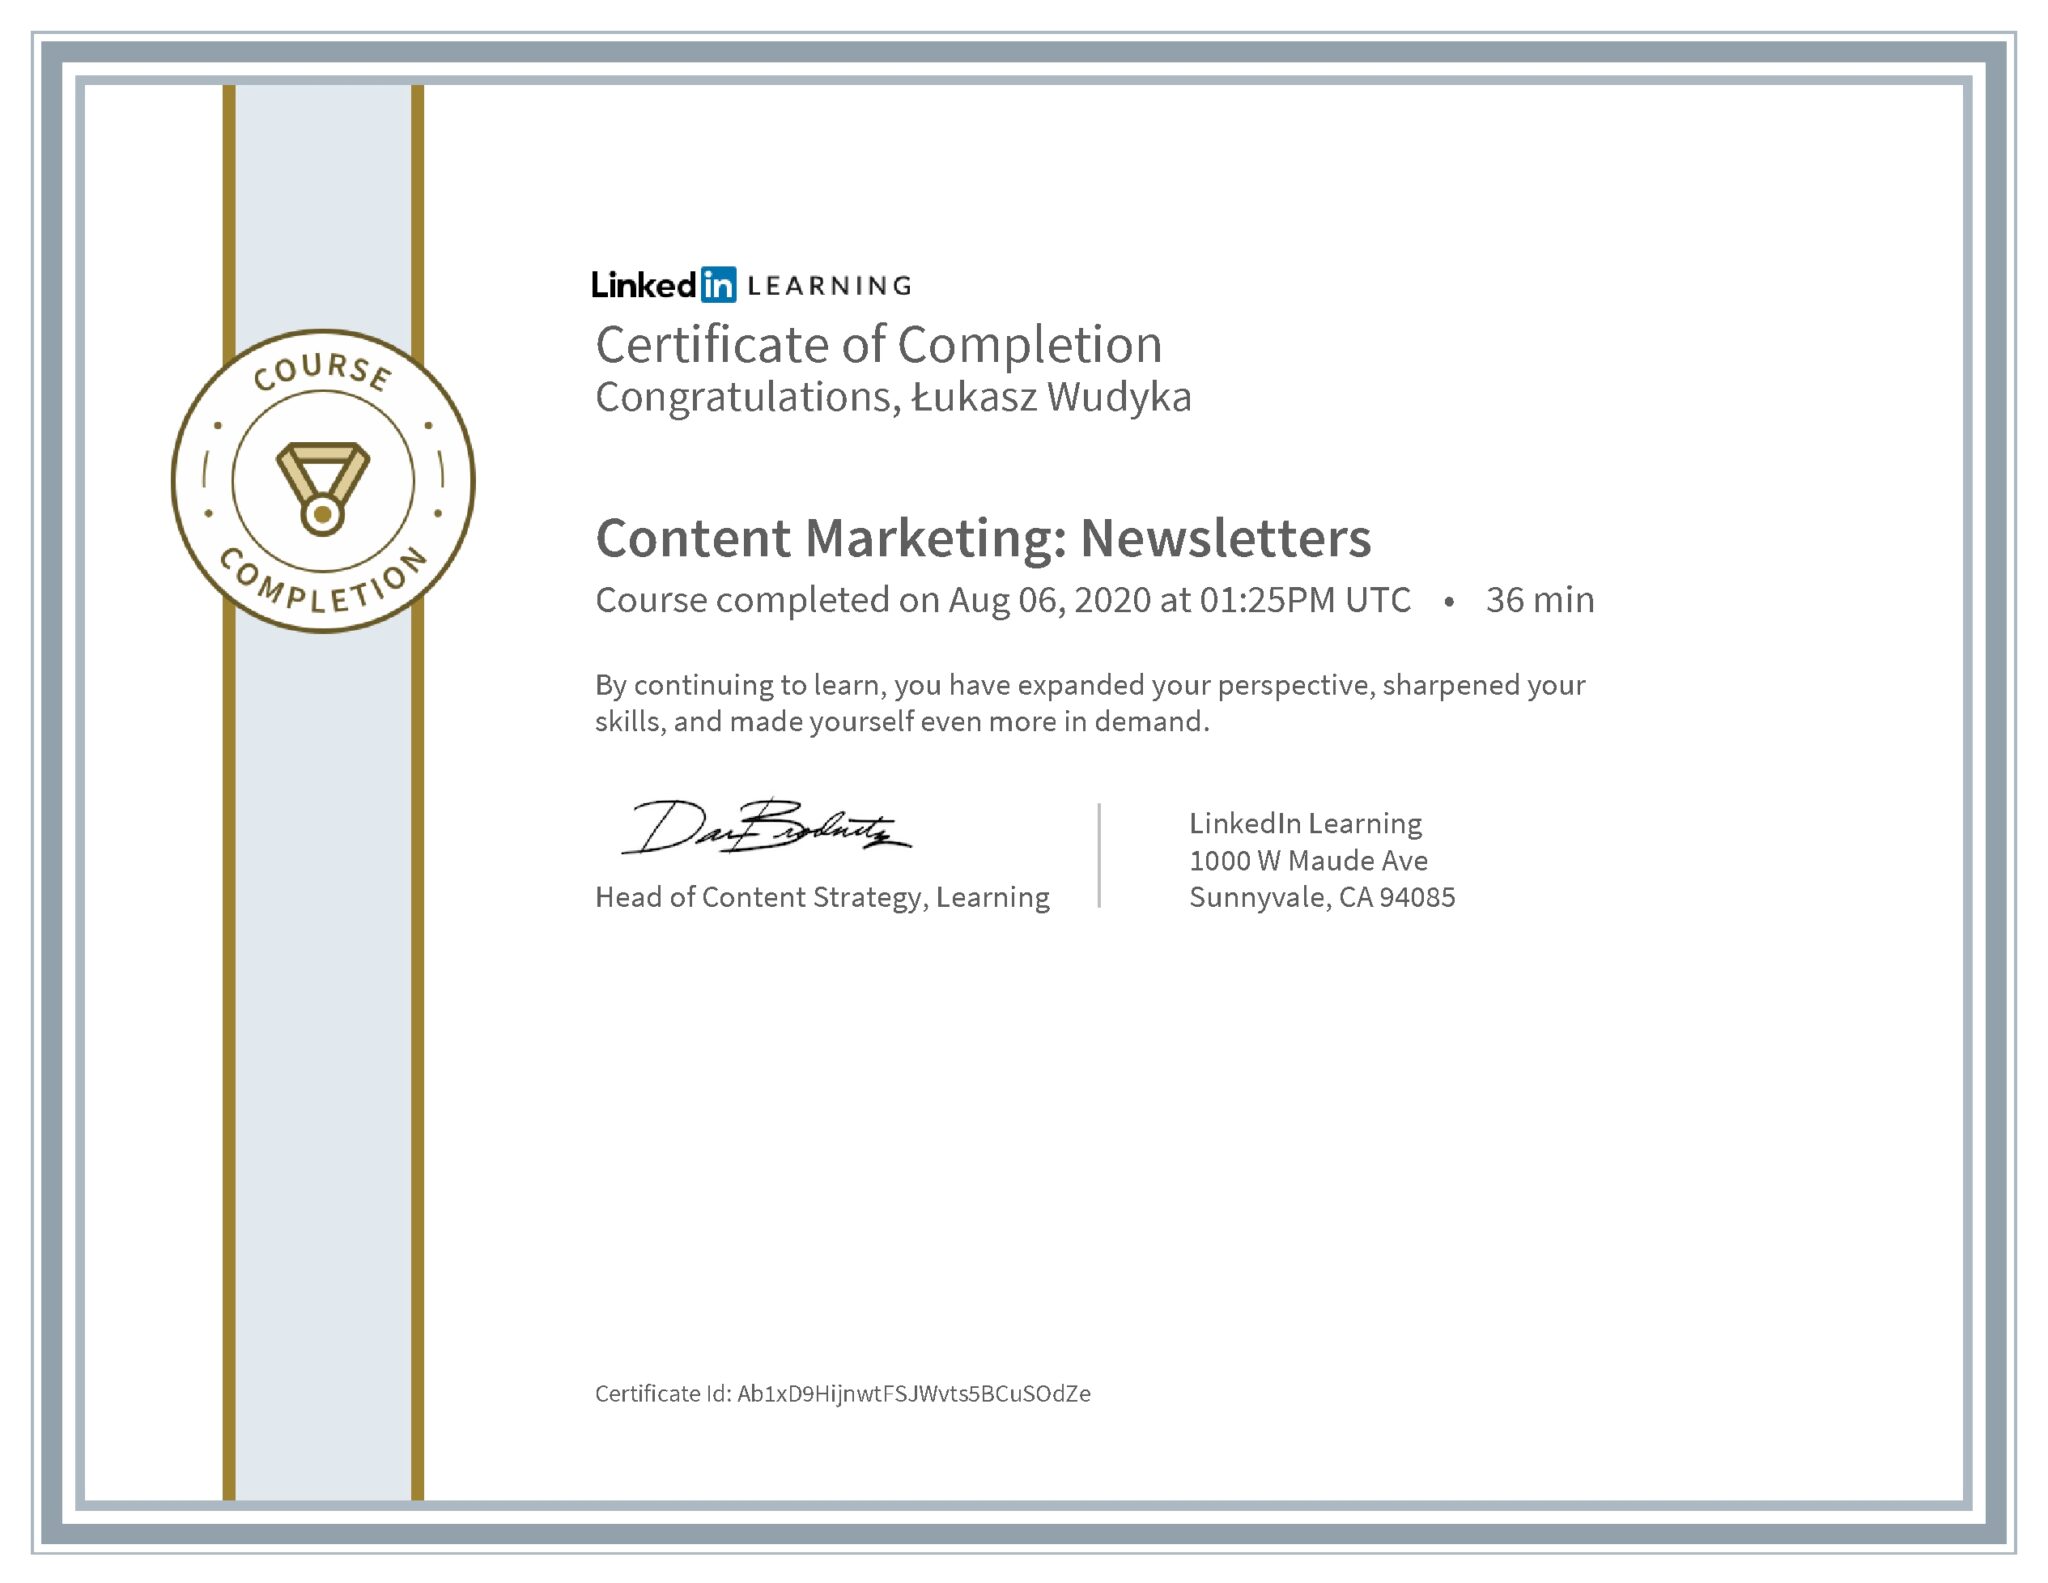 Łukasz Wudyka certyfikat LinkedIn Content Marketing: Newsletters